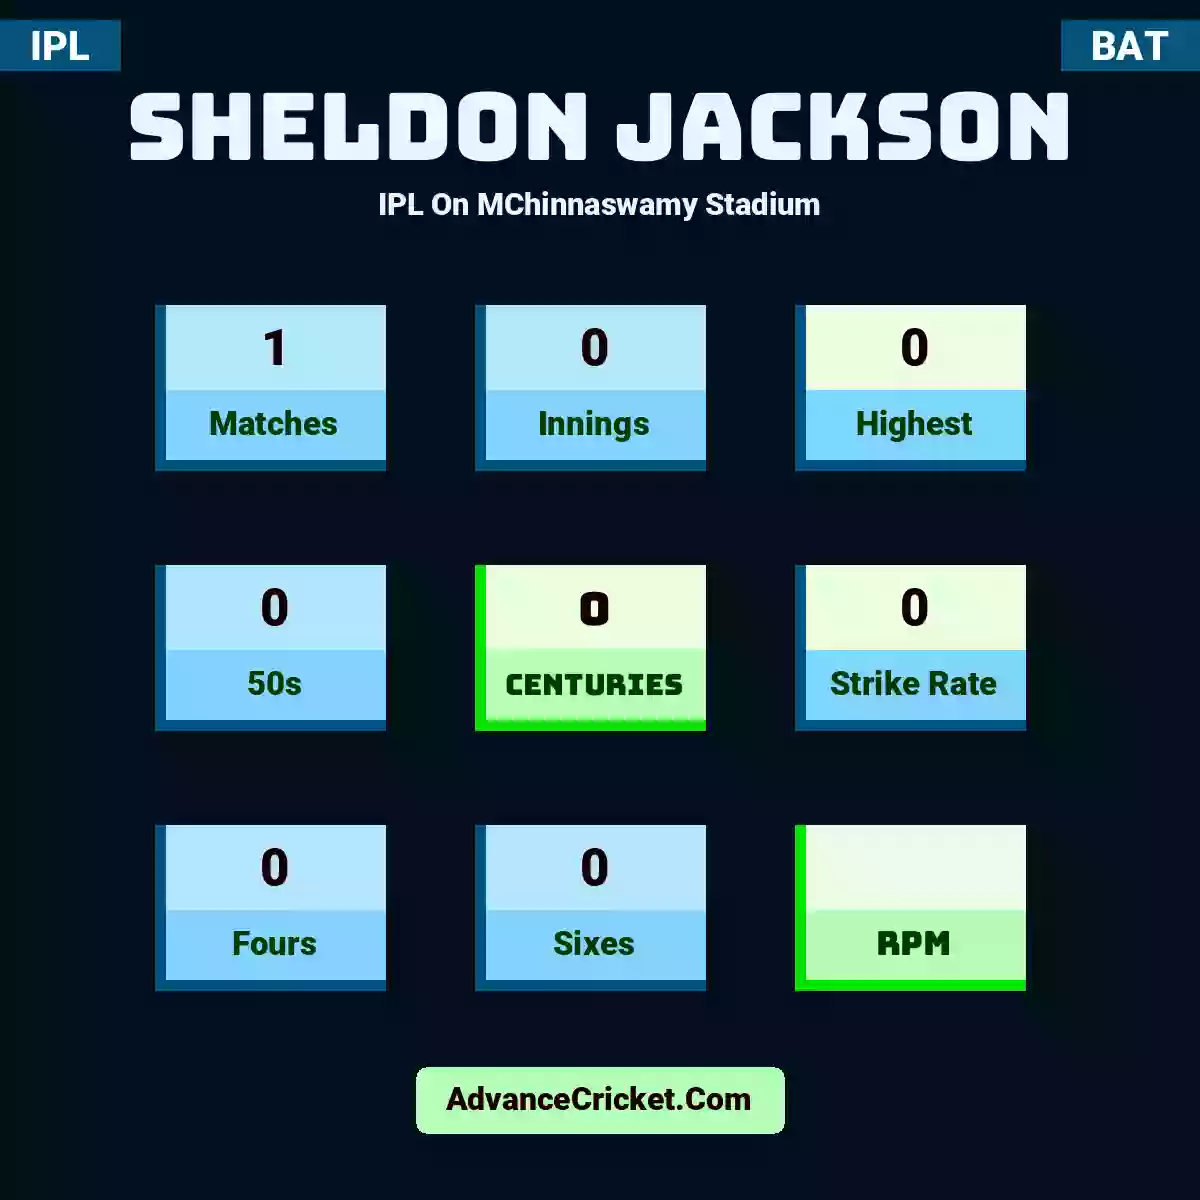 Sheldon Jackson IPL  On MChinnaswamy Stadium, Sheldon Jackson played 1 matches, scored 0 runs as highest, 0 half-centuries, and 0 centuries, with a strike rate of 0. S.Jackson hit 0 fours and 0 sixes.